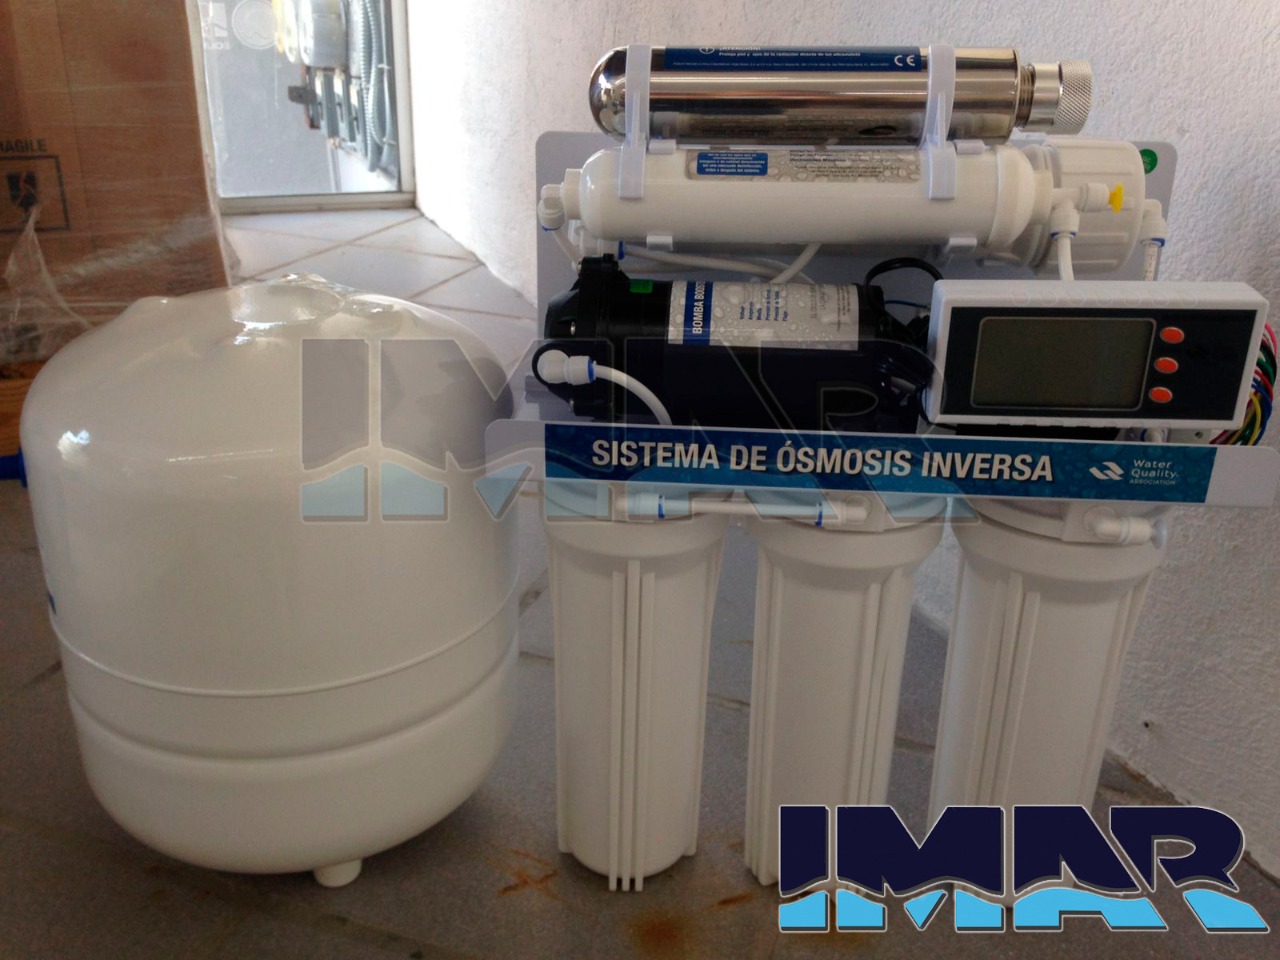 IMAR aqua systems